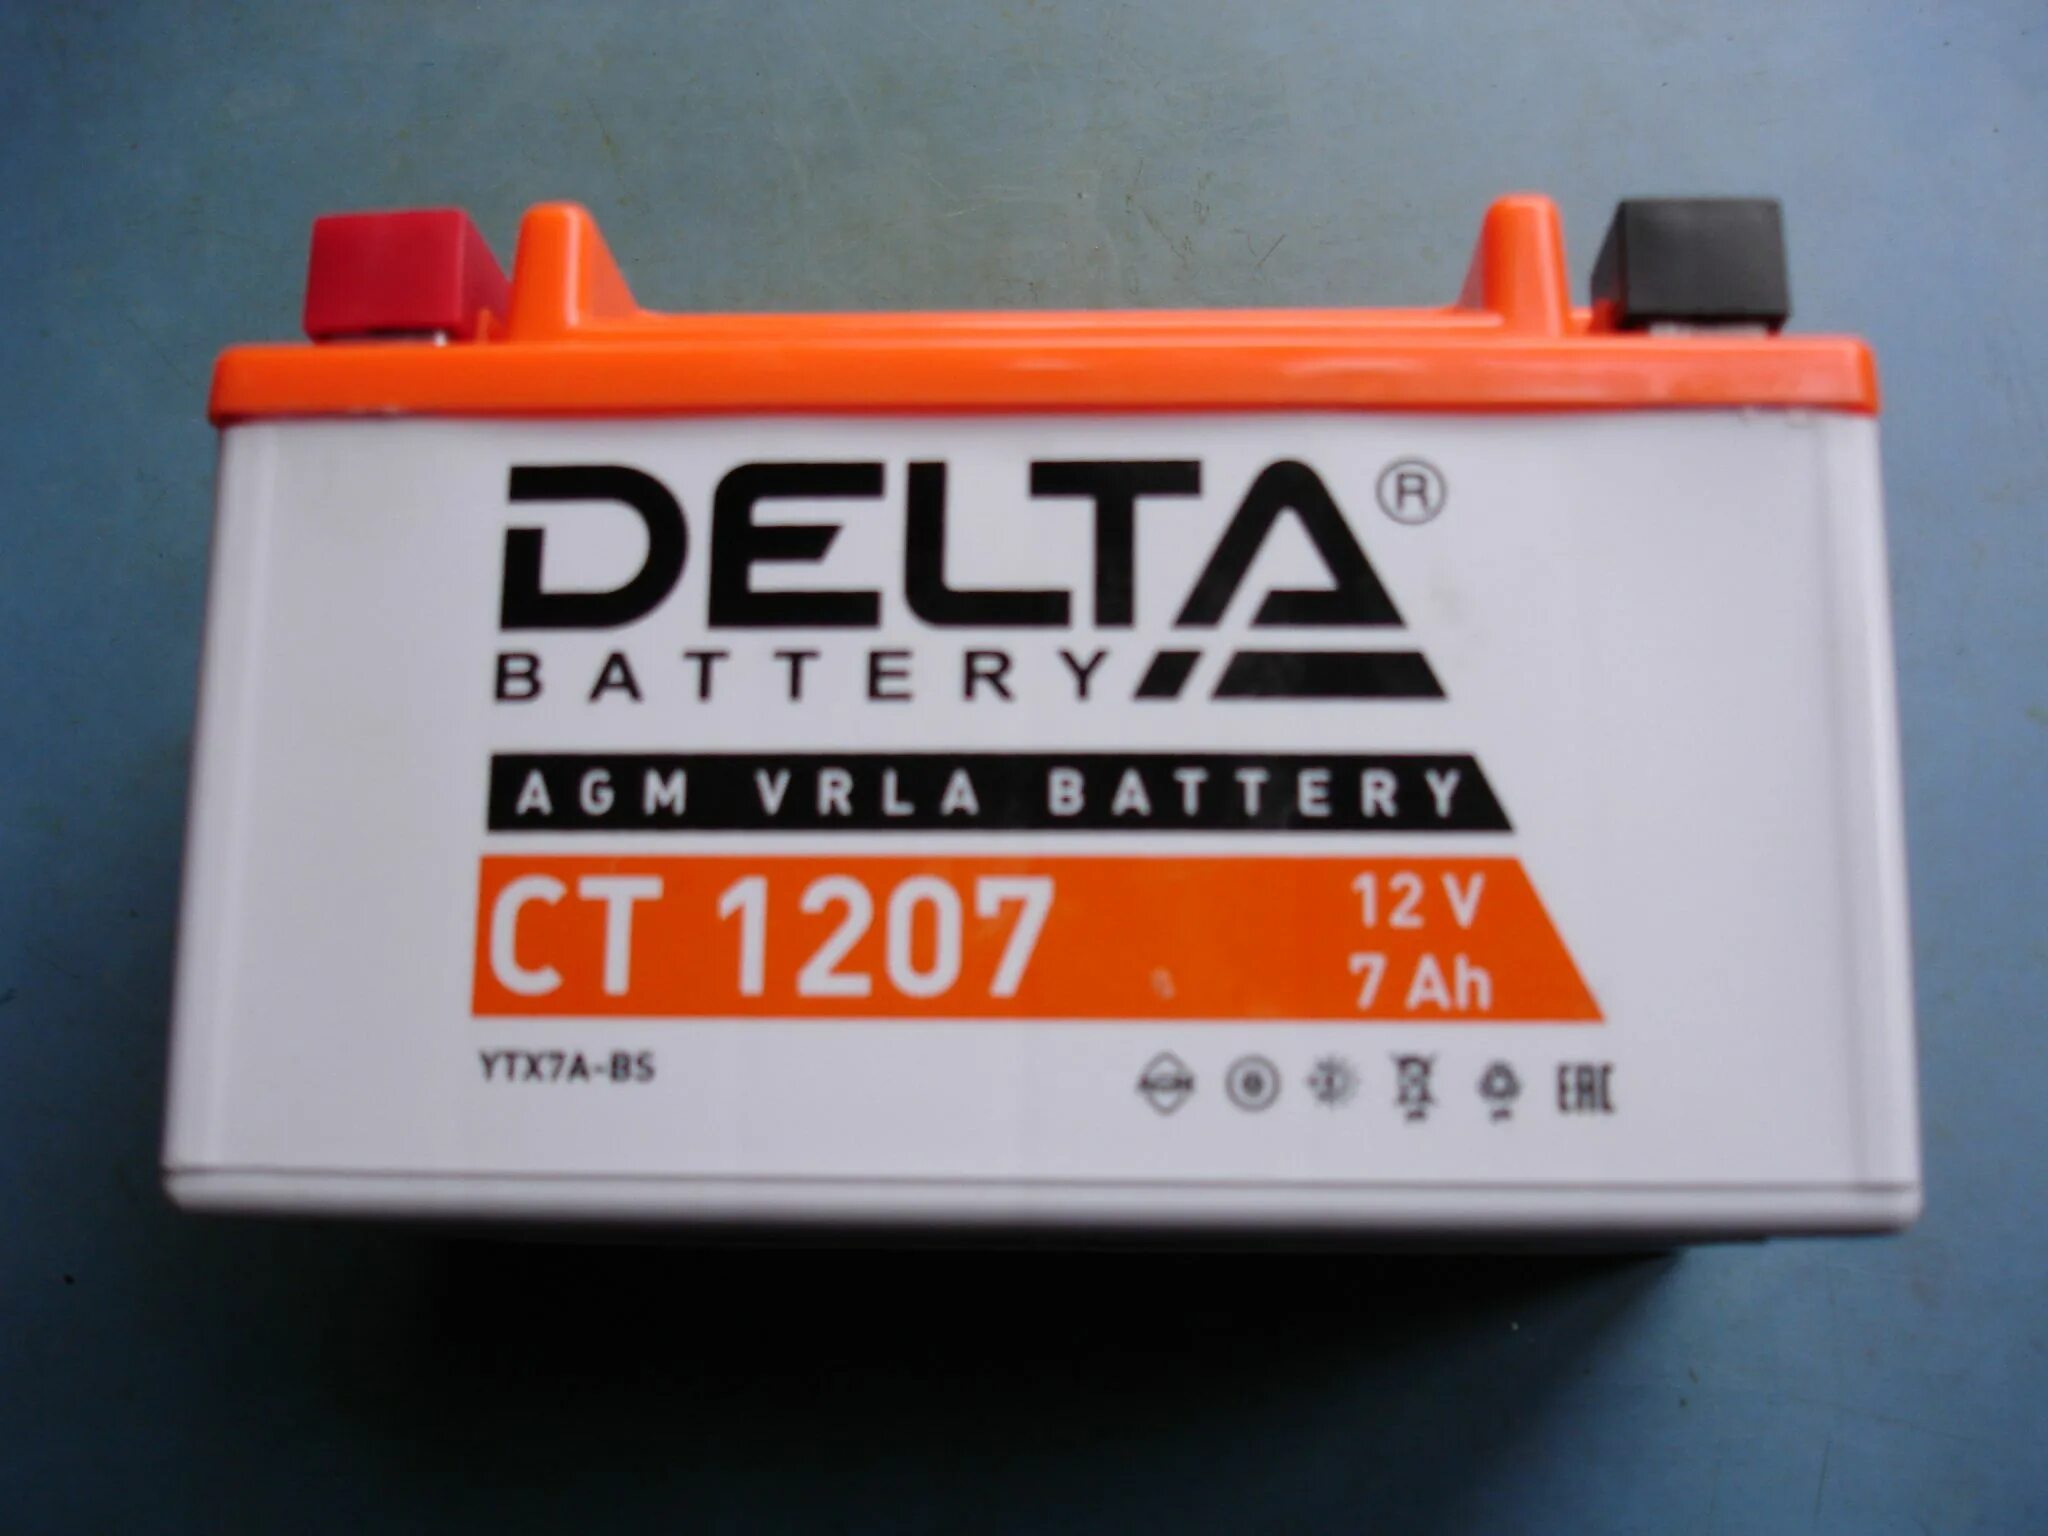 Battery 1207. Аккумулятор Delta CT 1207. Аккумулятор Delta Battery ct1207. Аккумулятор для скутера Delta 1207. Аккумуляторная батарея Дельта 1207.